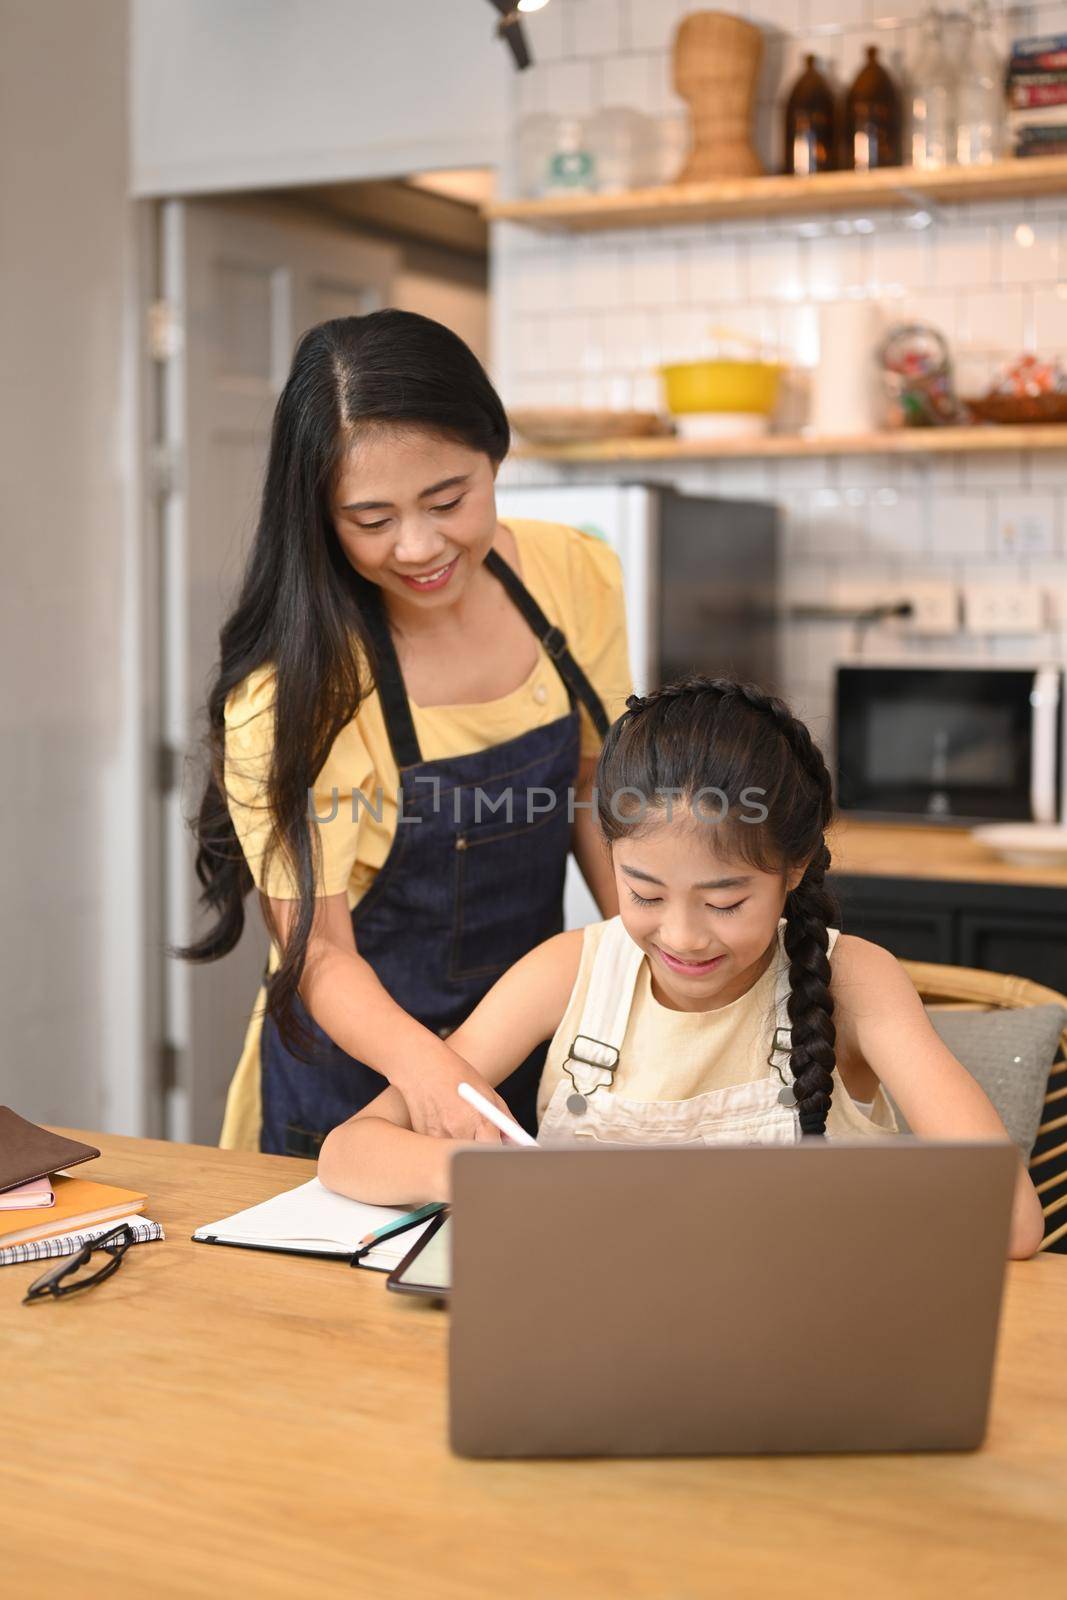 Caring asian mother helping daughter doing homework in kitchen table by prathanchorruangsak